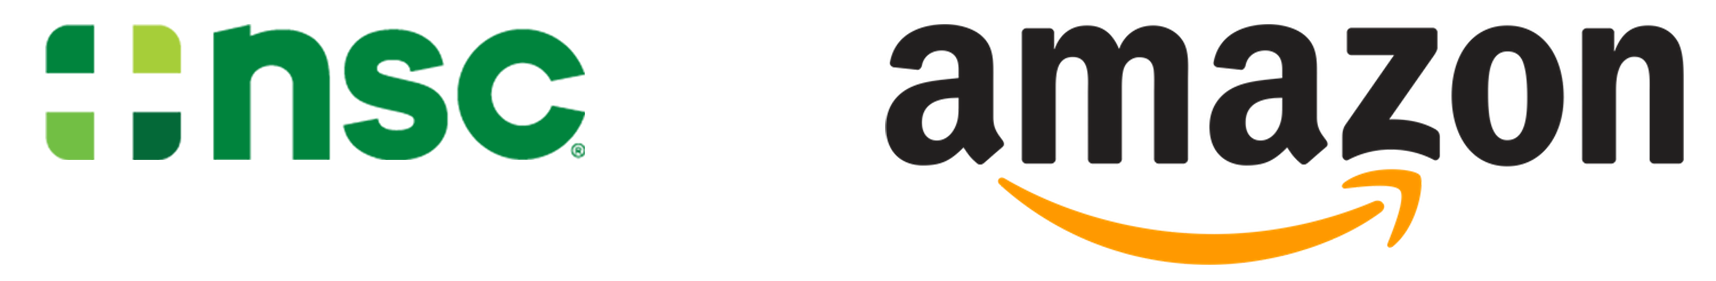 NSC Amazon logo